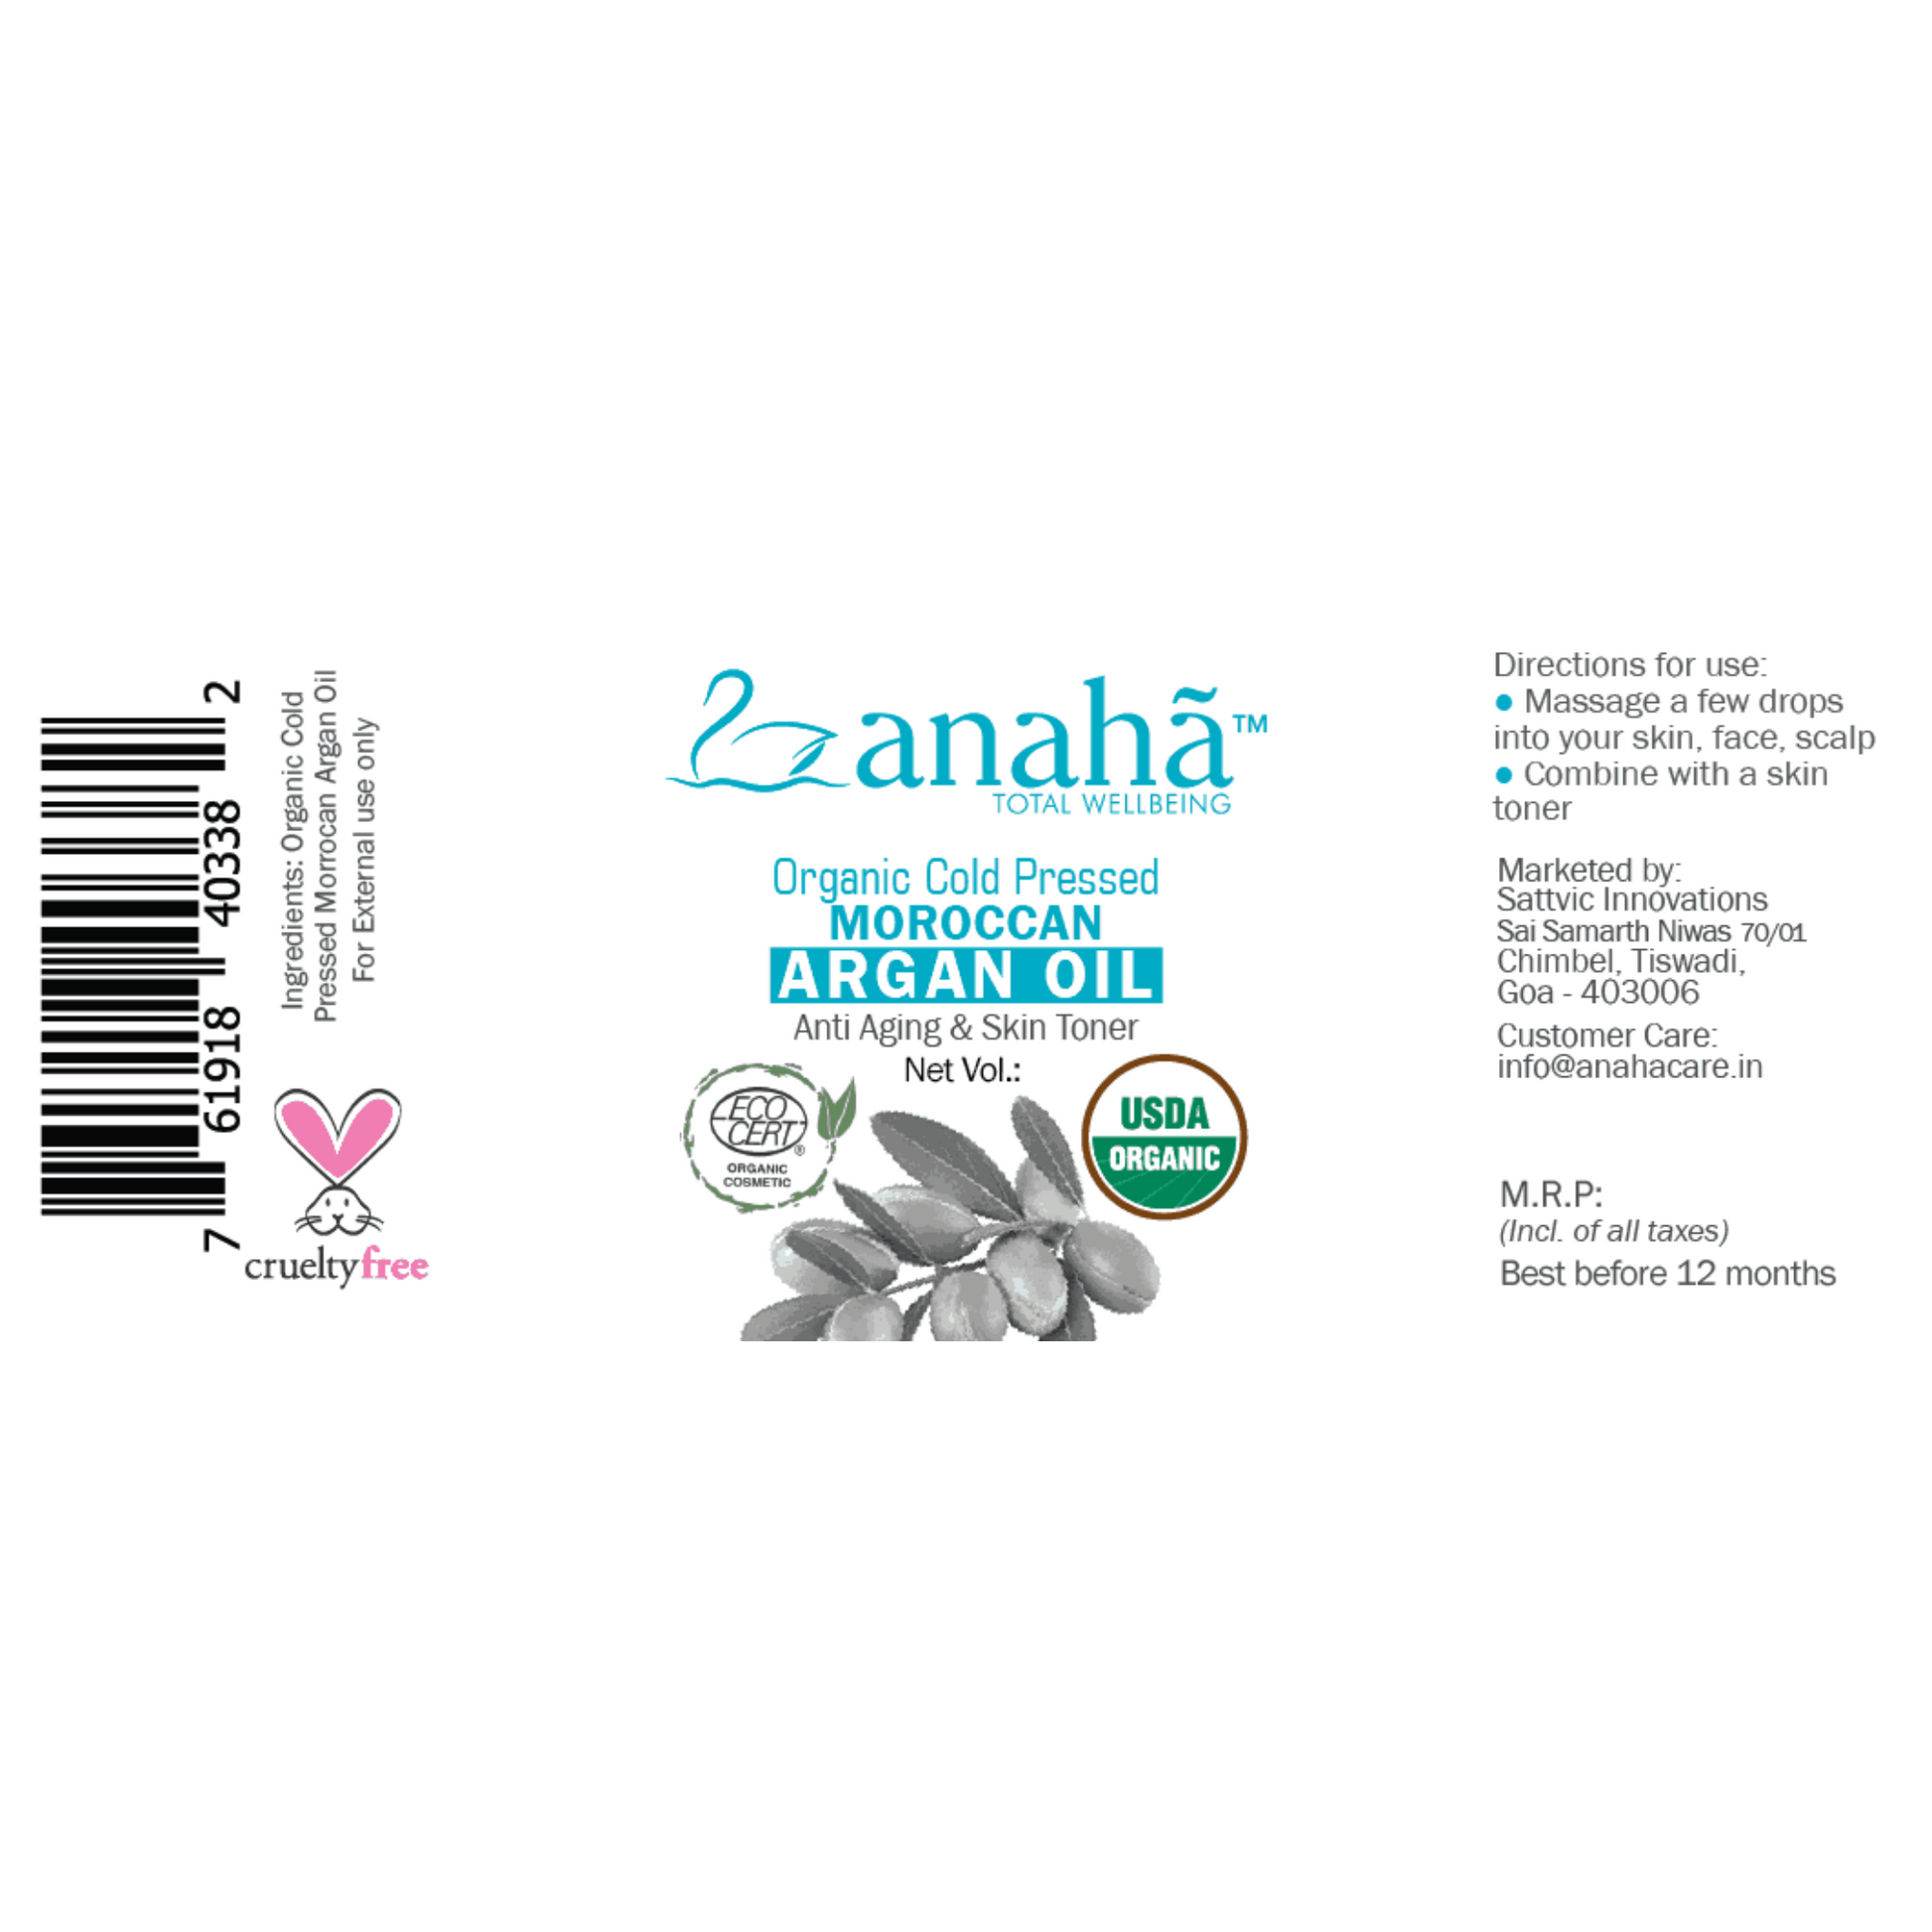 Argan Oil - Cold Pressed Organic Moroccan (Anti Aging & Skin toner) Anaha